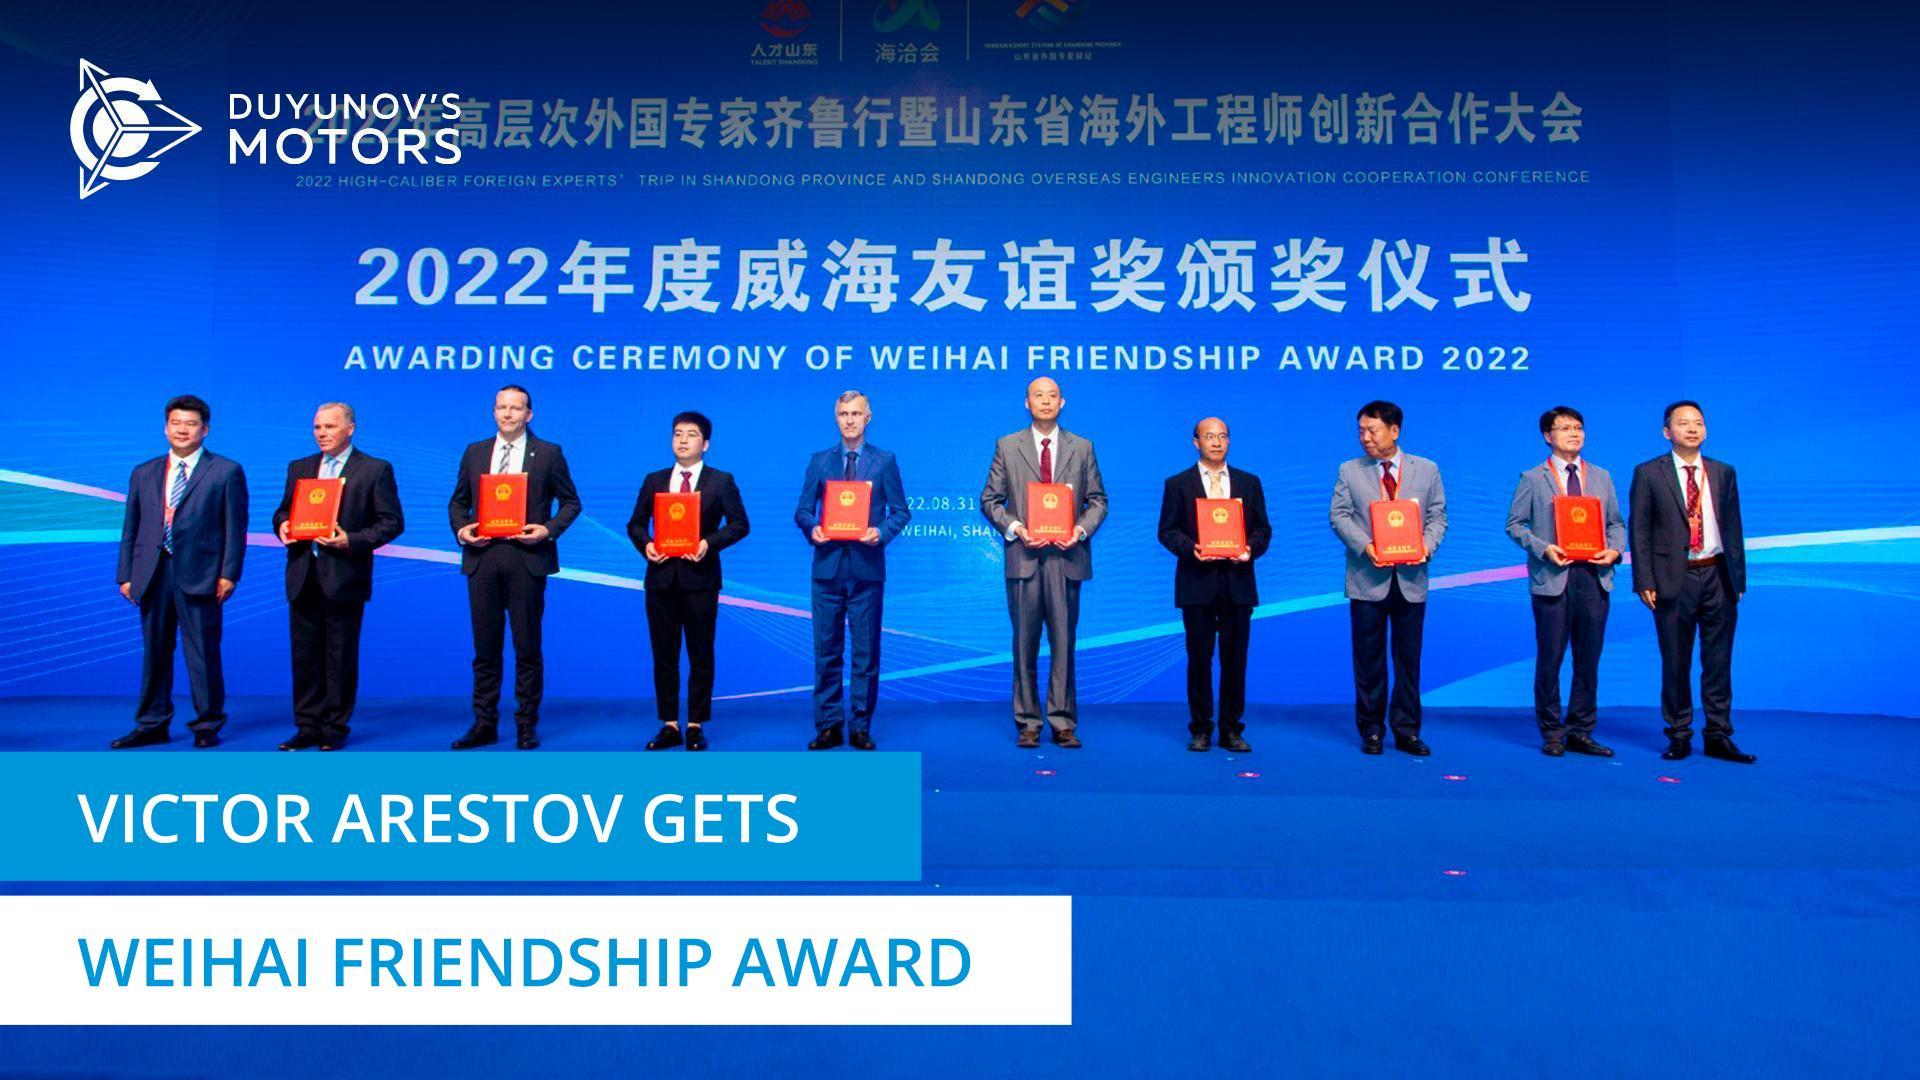 Victor Arestov gets the Weihai Friendship Award